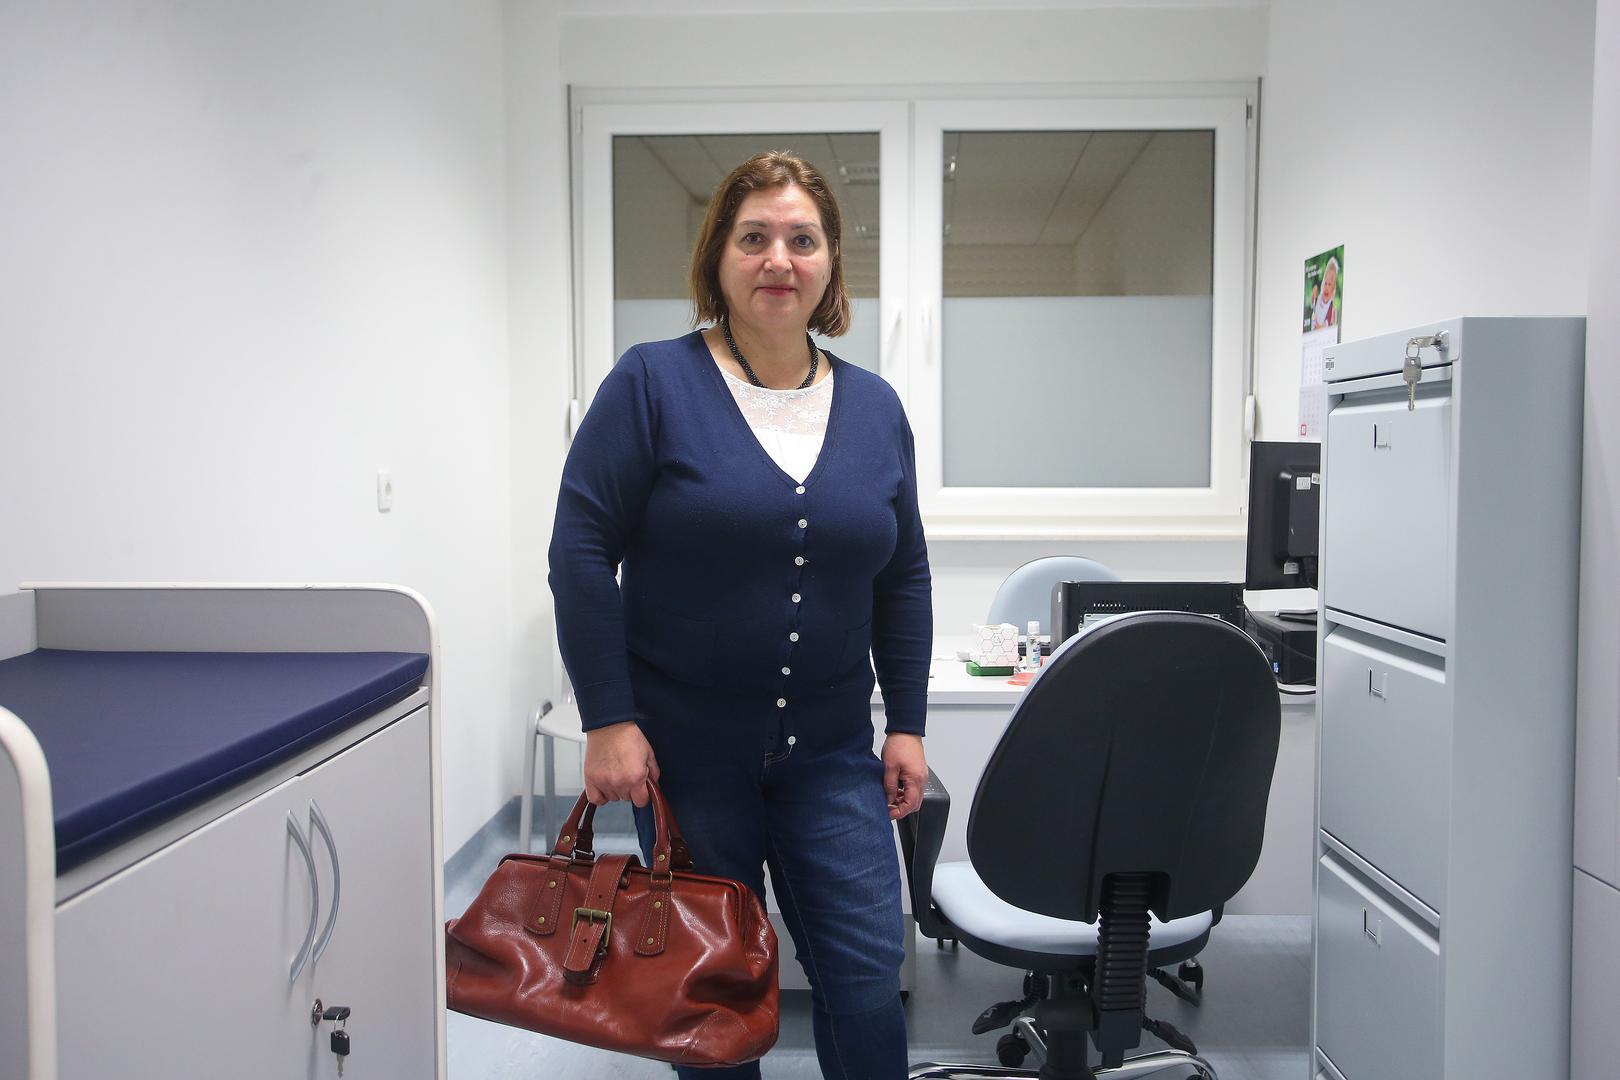 Zaposlena je i patronažna sestra Mirjana Fišer
koja sada skrbi za veliko područje s pet tisuća ljudi